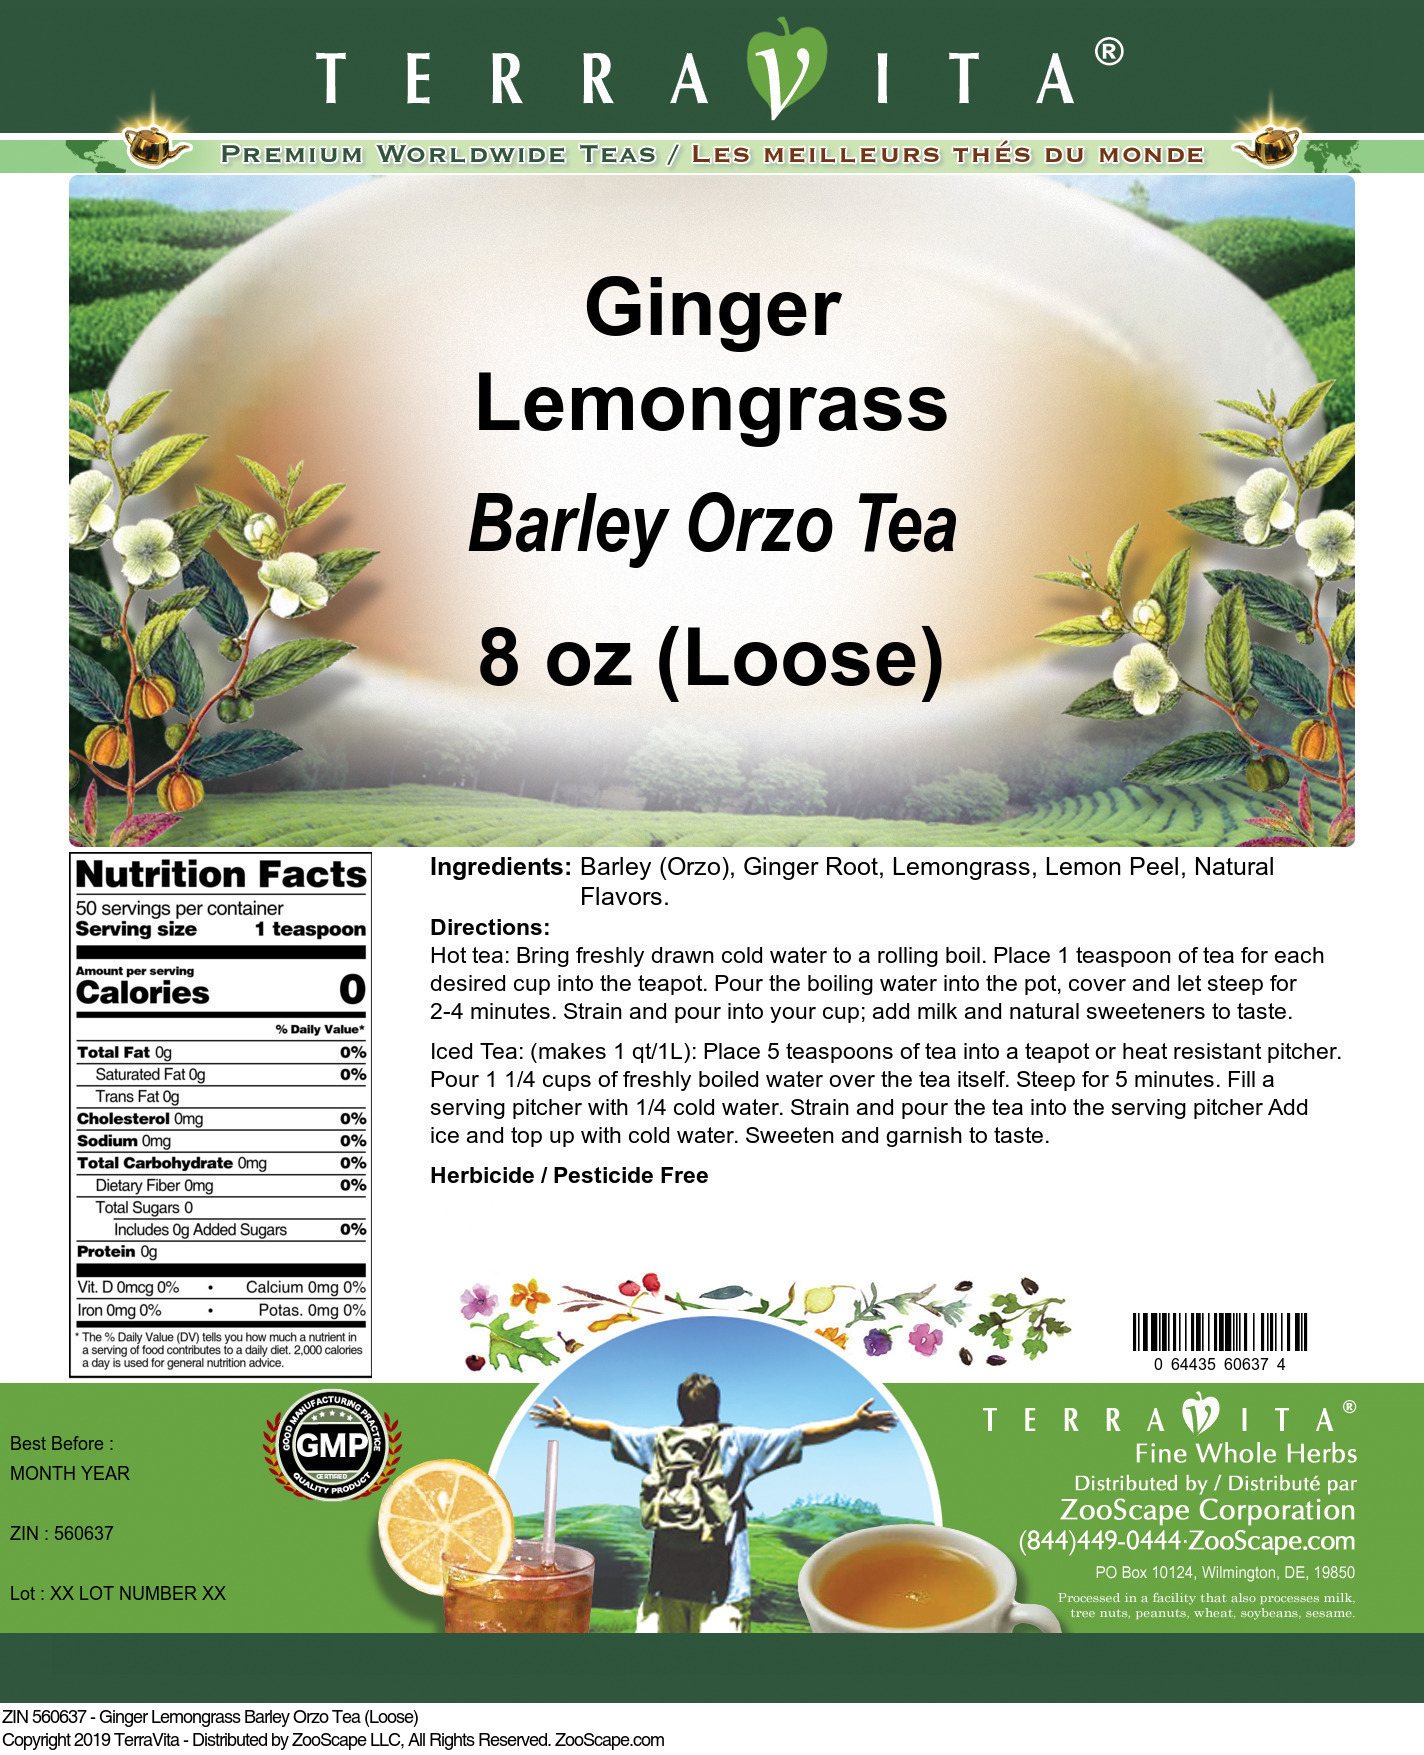 Ginger Lemongrass Barley Orzo Tea (Loose) - Label